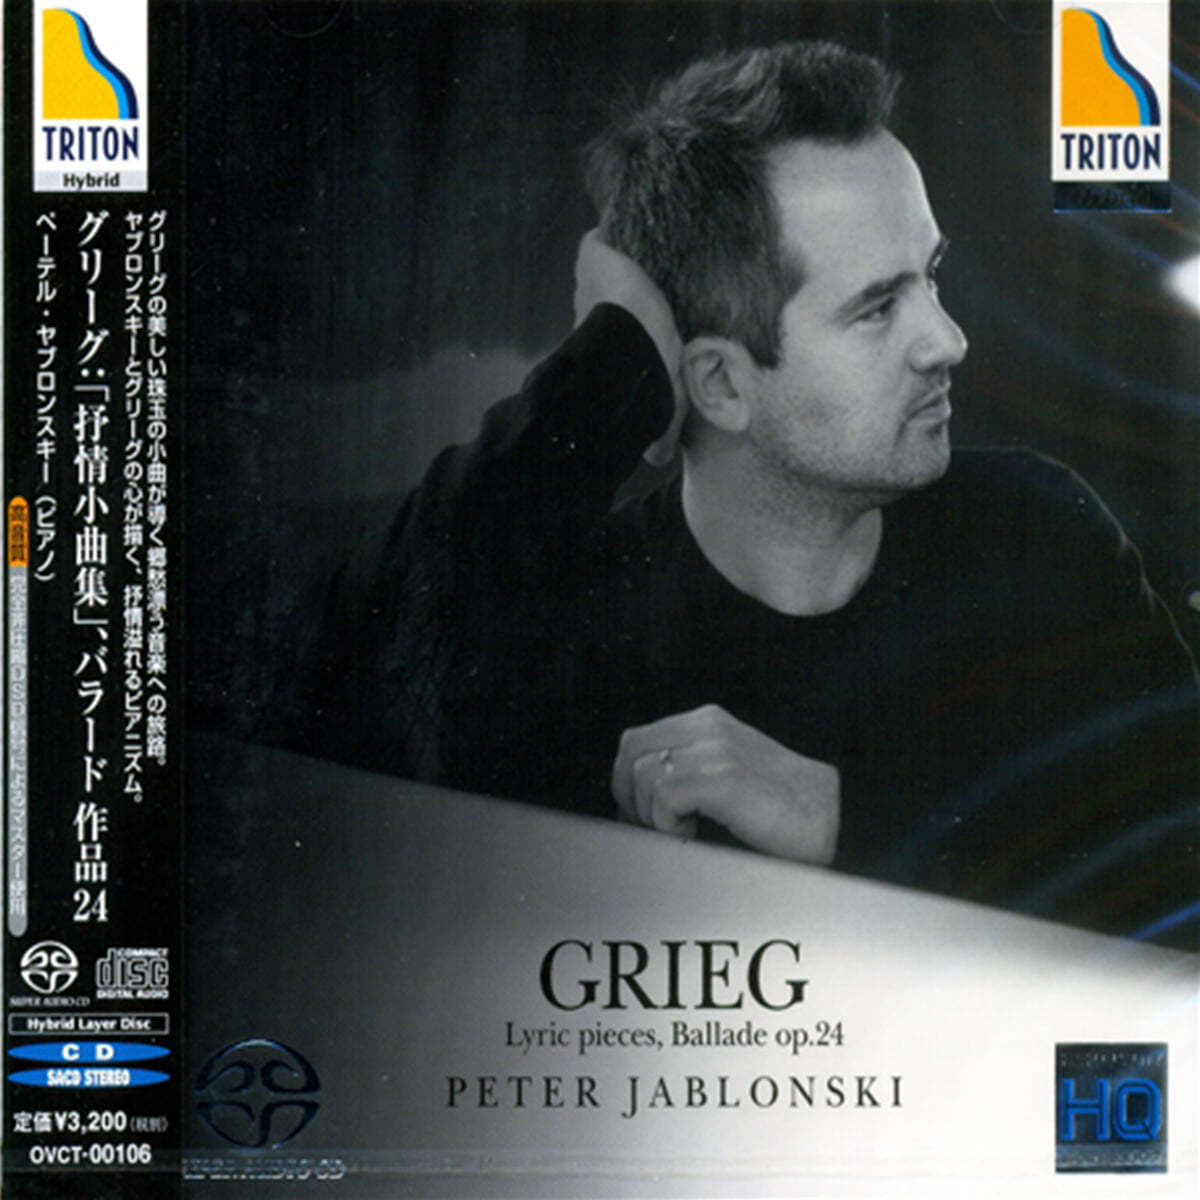 Peter Jablonski 그리그: 서정소곡집 (Grieg : Lyric Pieces 'Selections') 피터 야블론스키